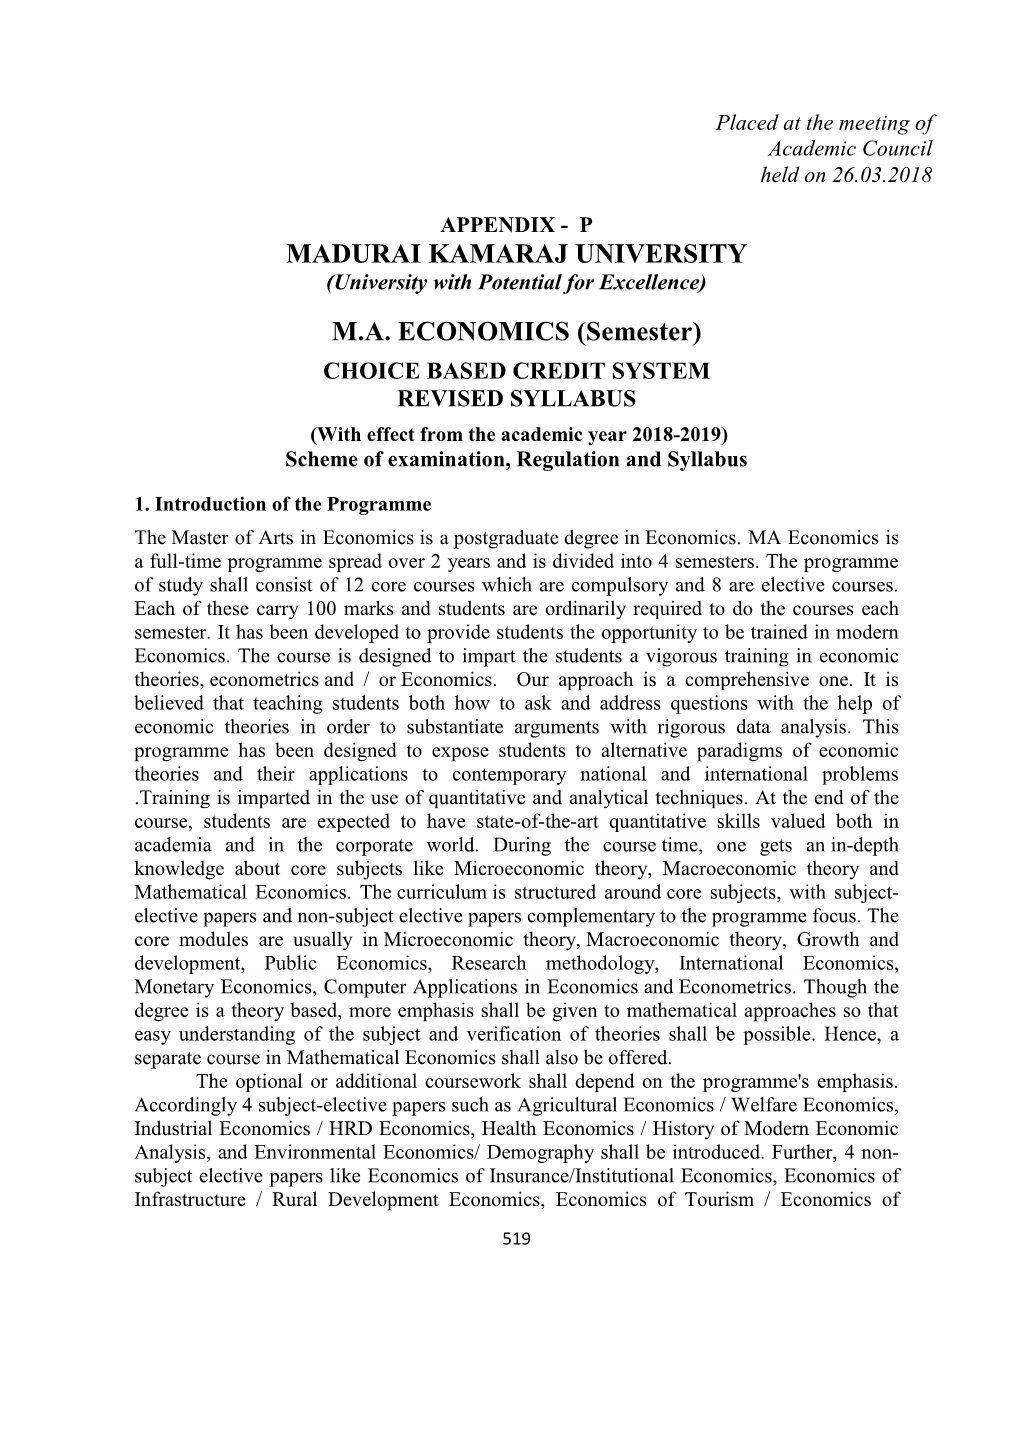 MADURAI KAMARAJ UNIVERSITY M.A. ECONOMICS (Semester)